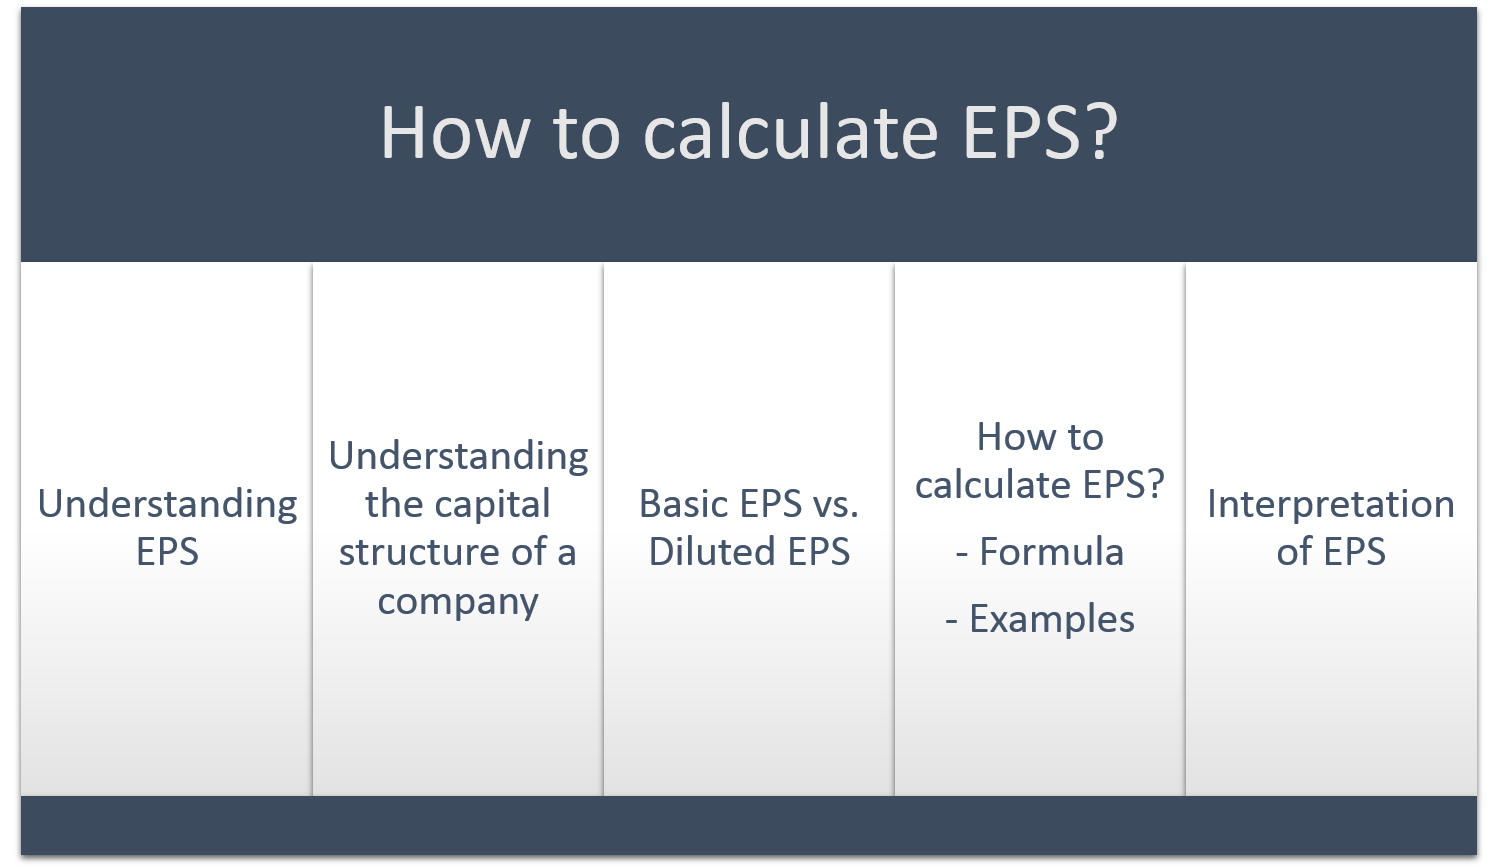 Calculate EPS